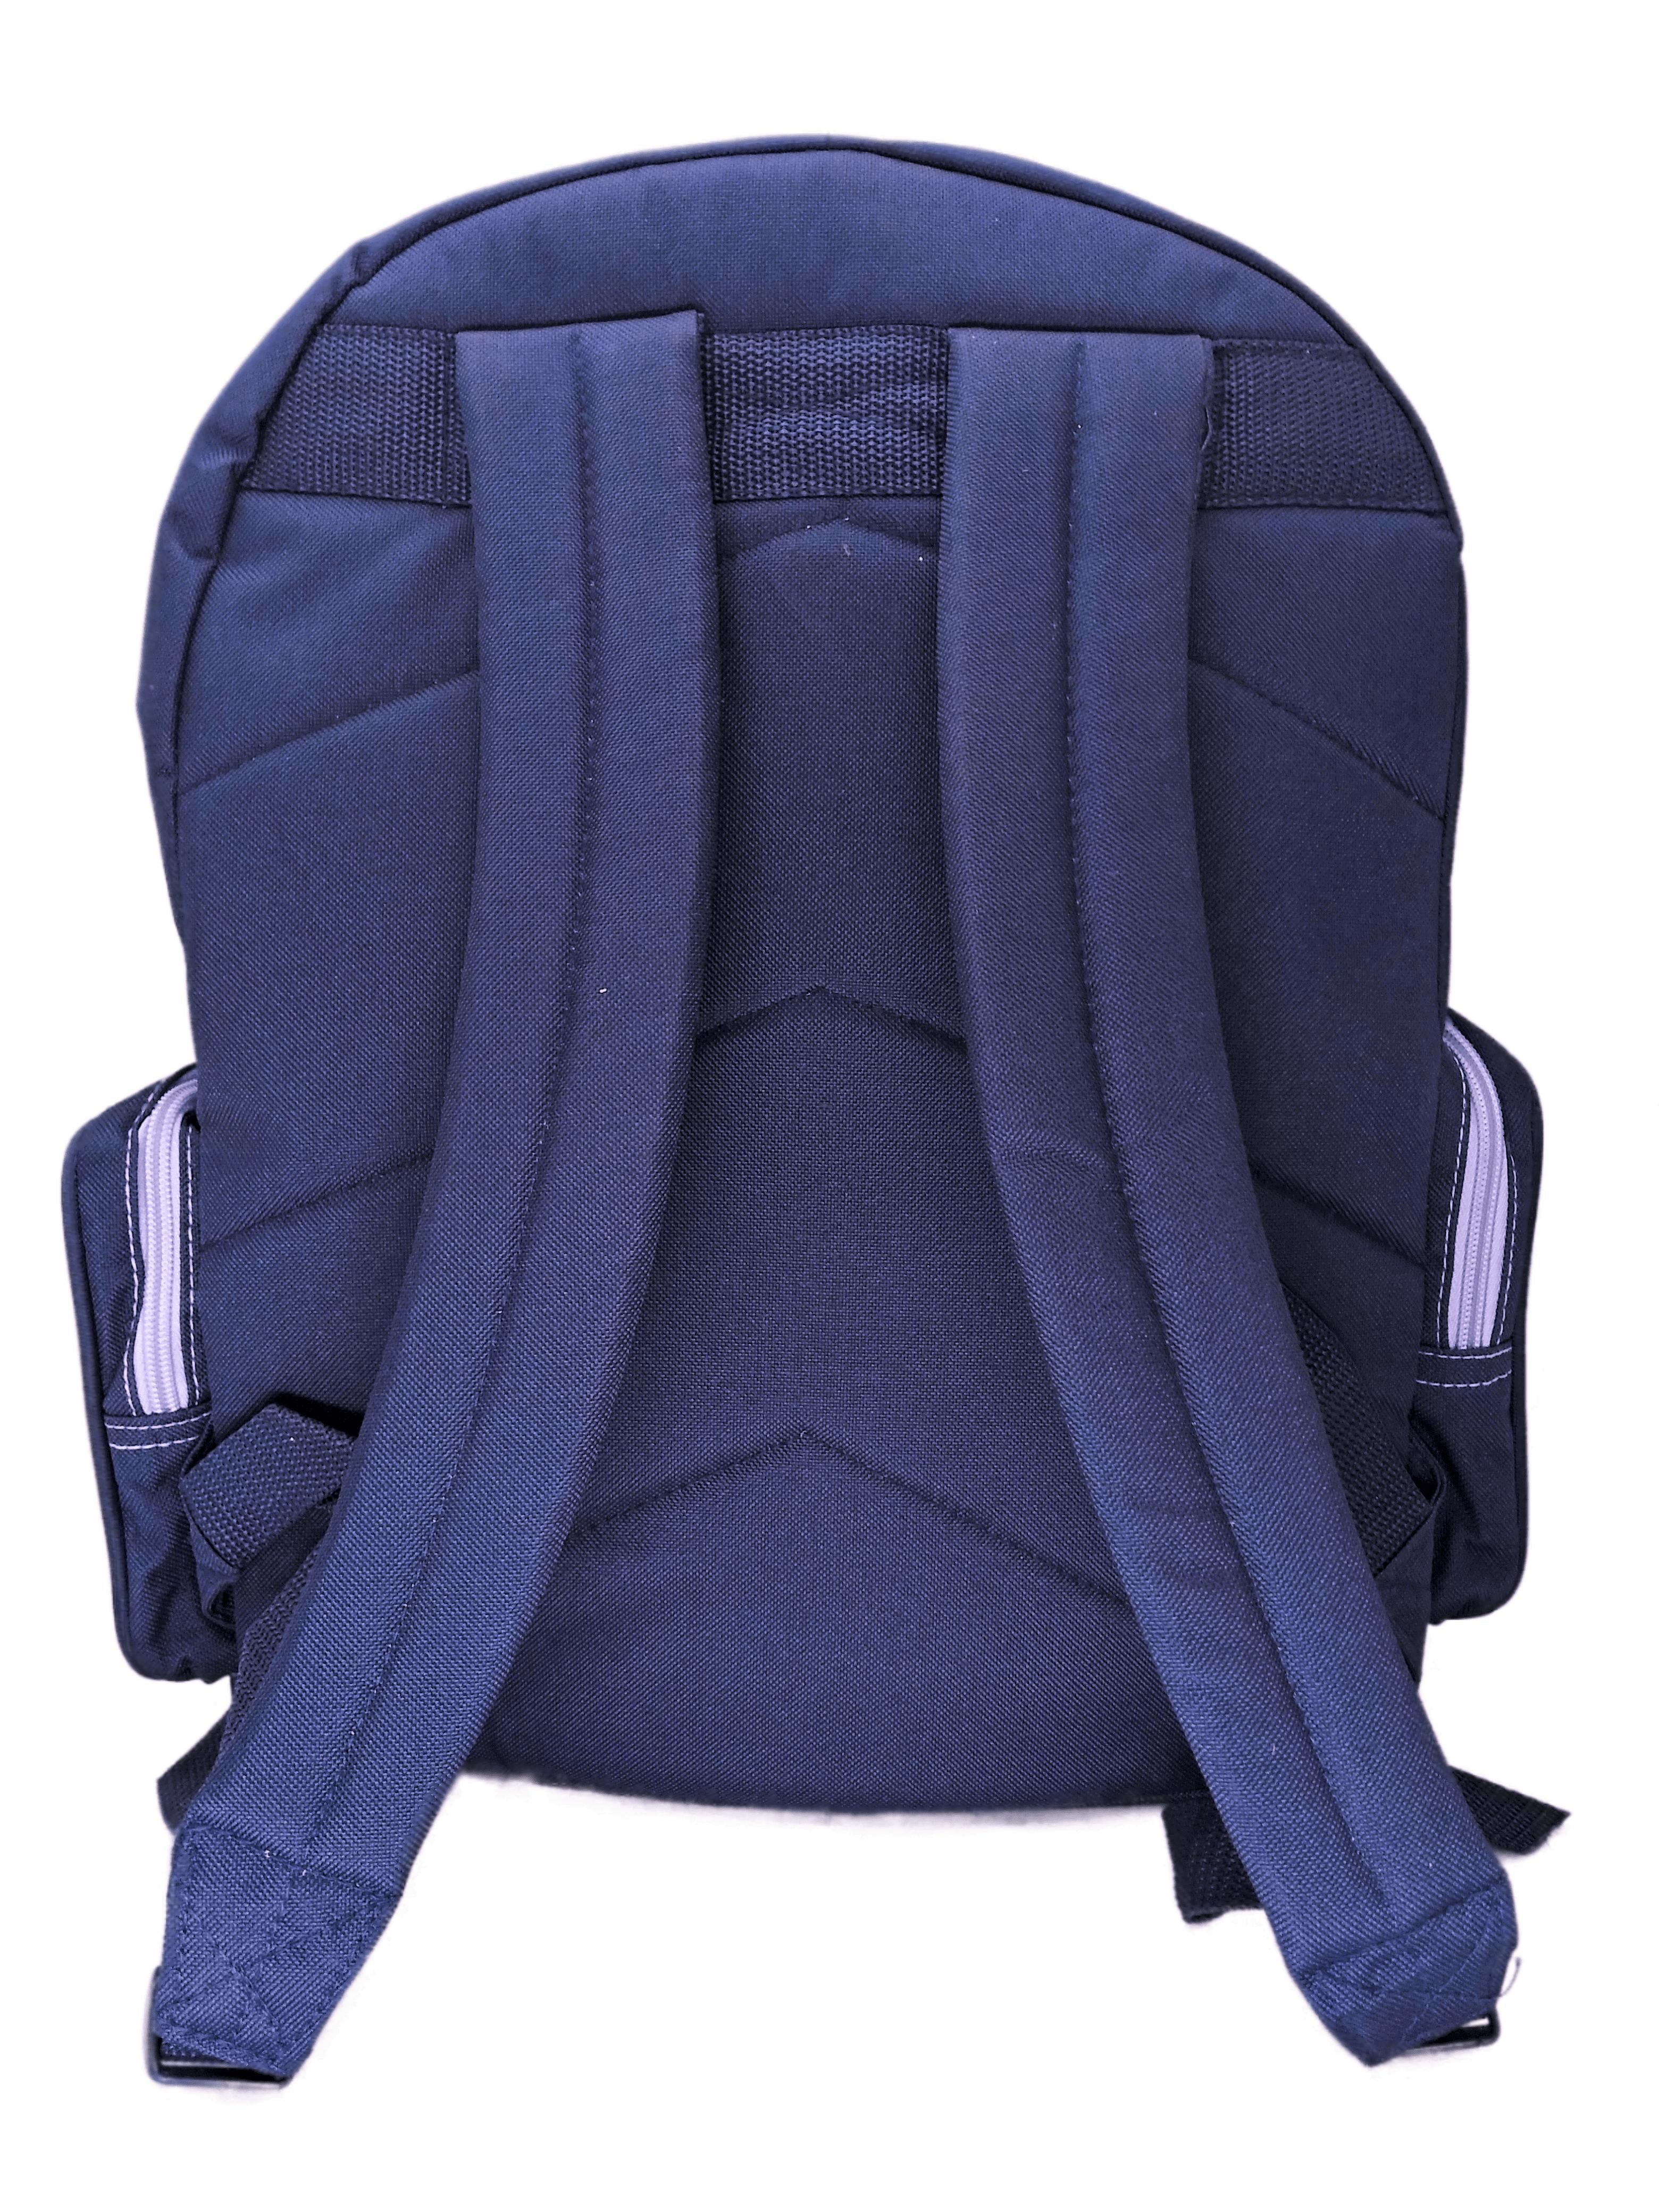 Bratz Unisex 18 Backpack with Internal Laptop Sleeve, Multi-Color 